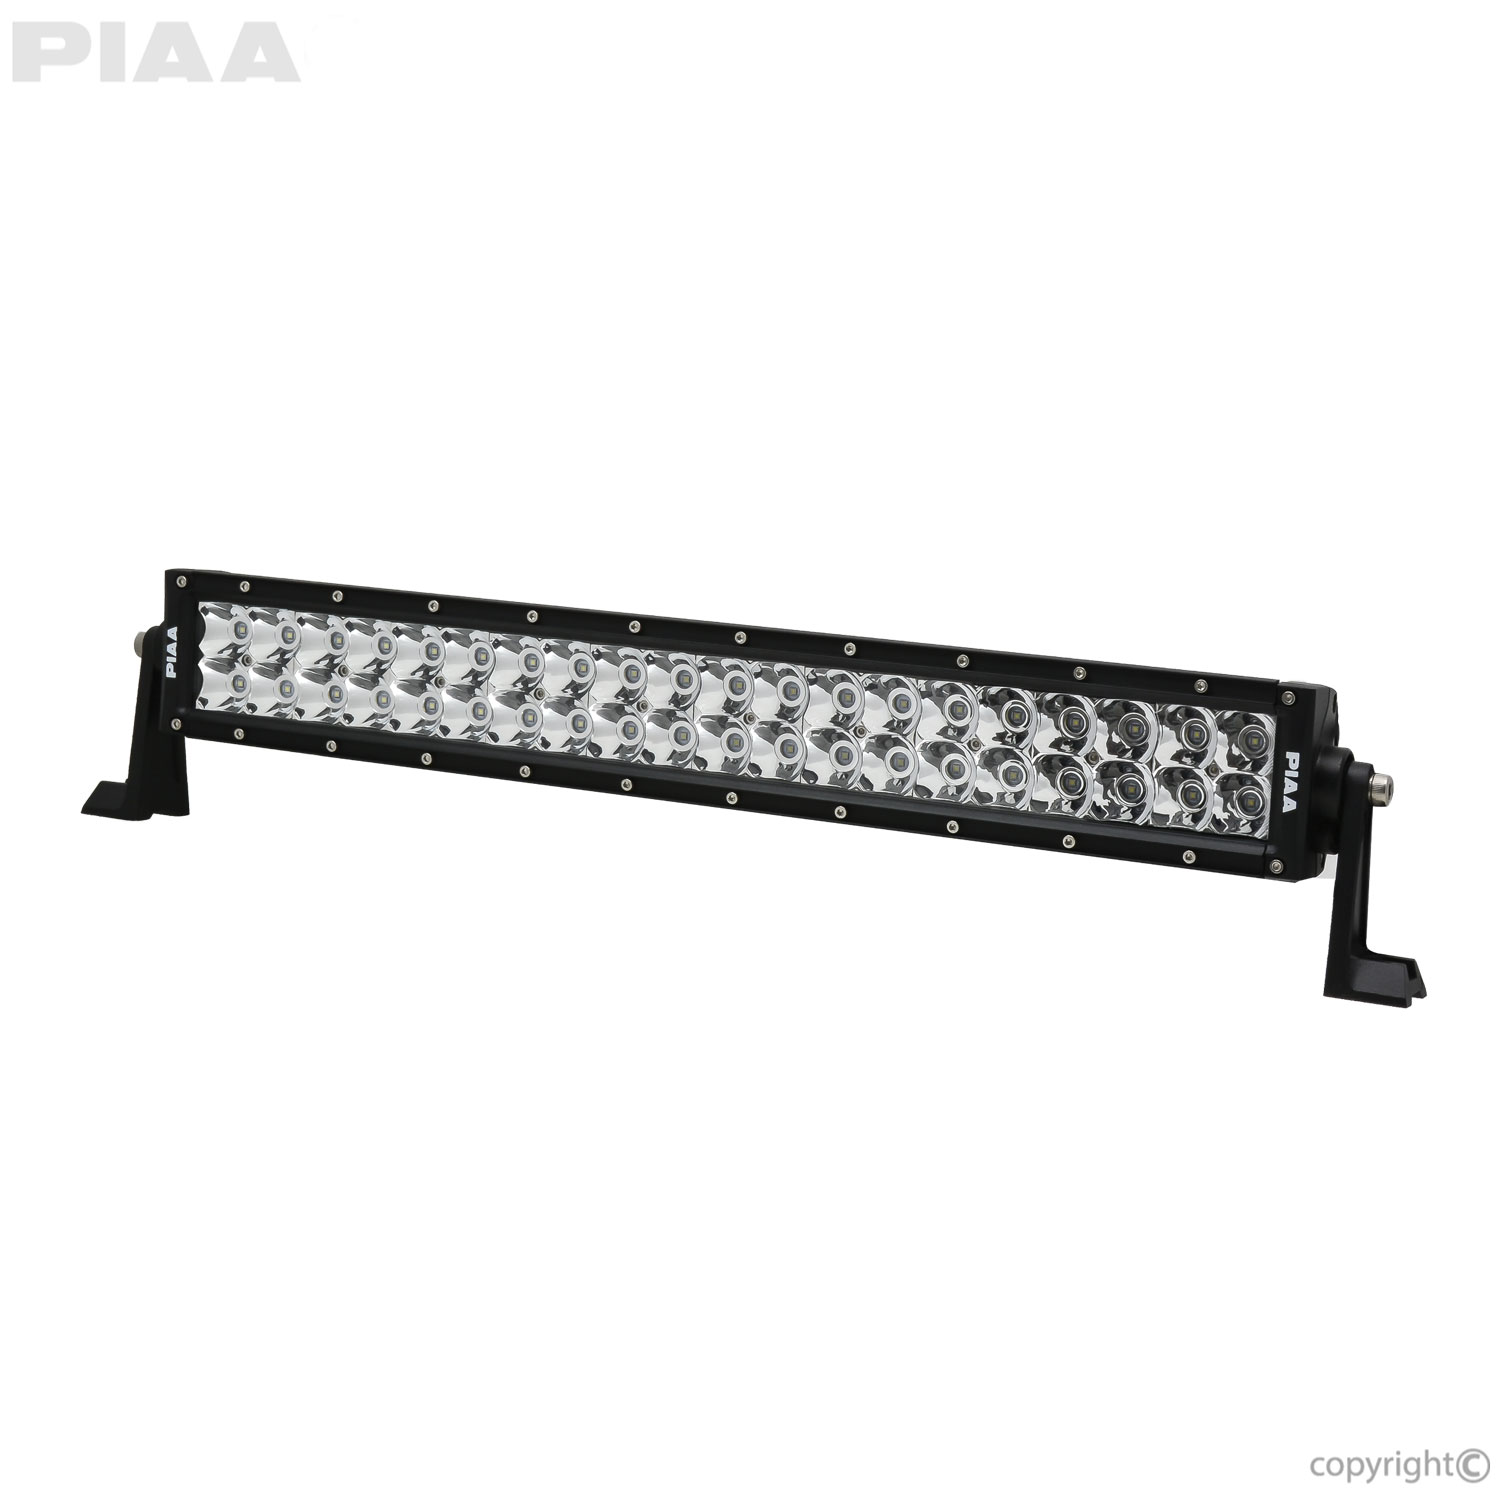 PIAA Quad 12 LED Combo Light 